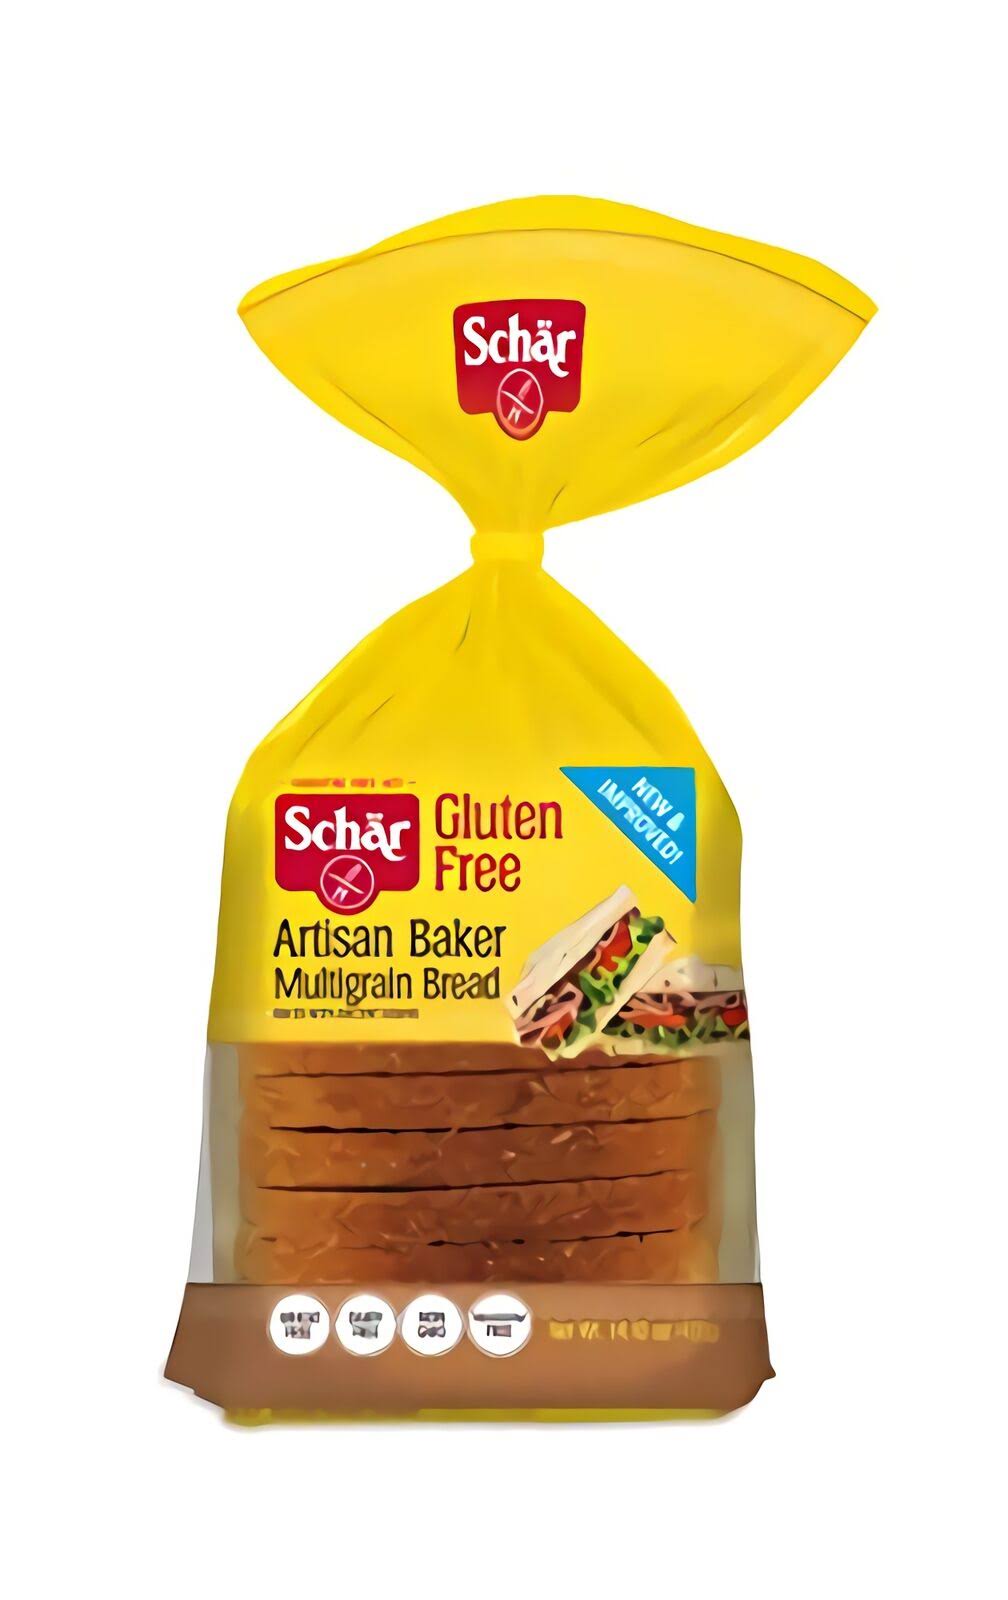 Schar Gluten Free Artisan Baker Multigrain Bread, 14.1 oz 6-Pack